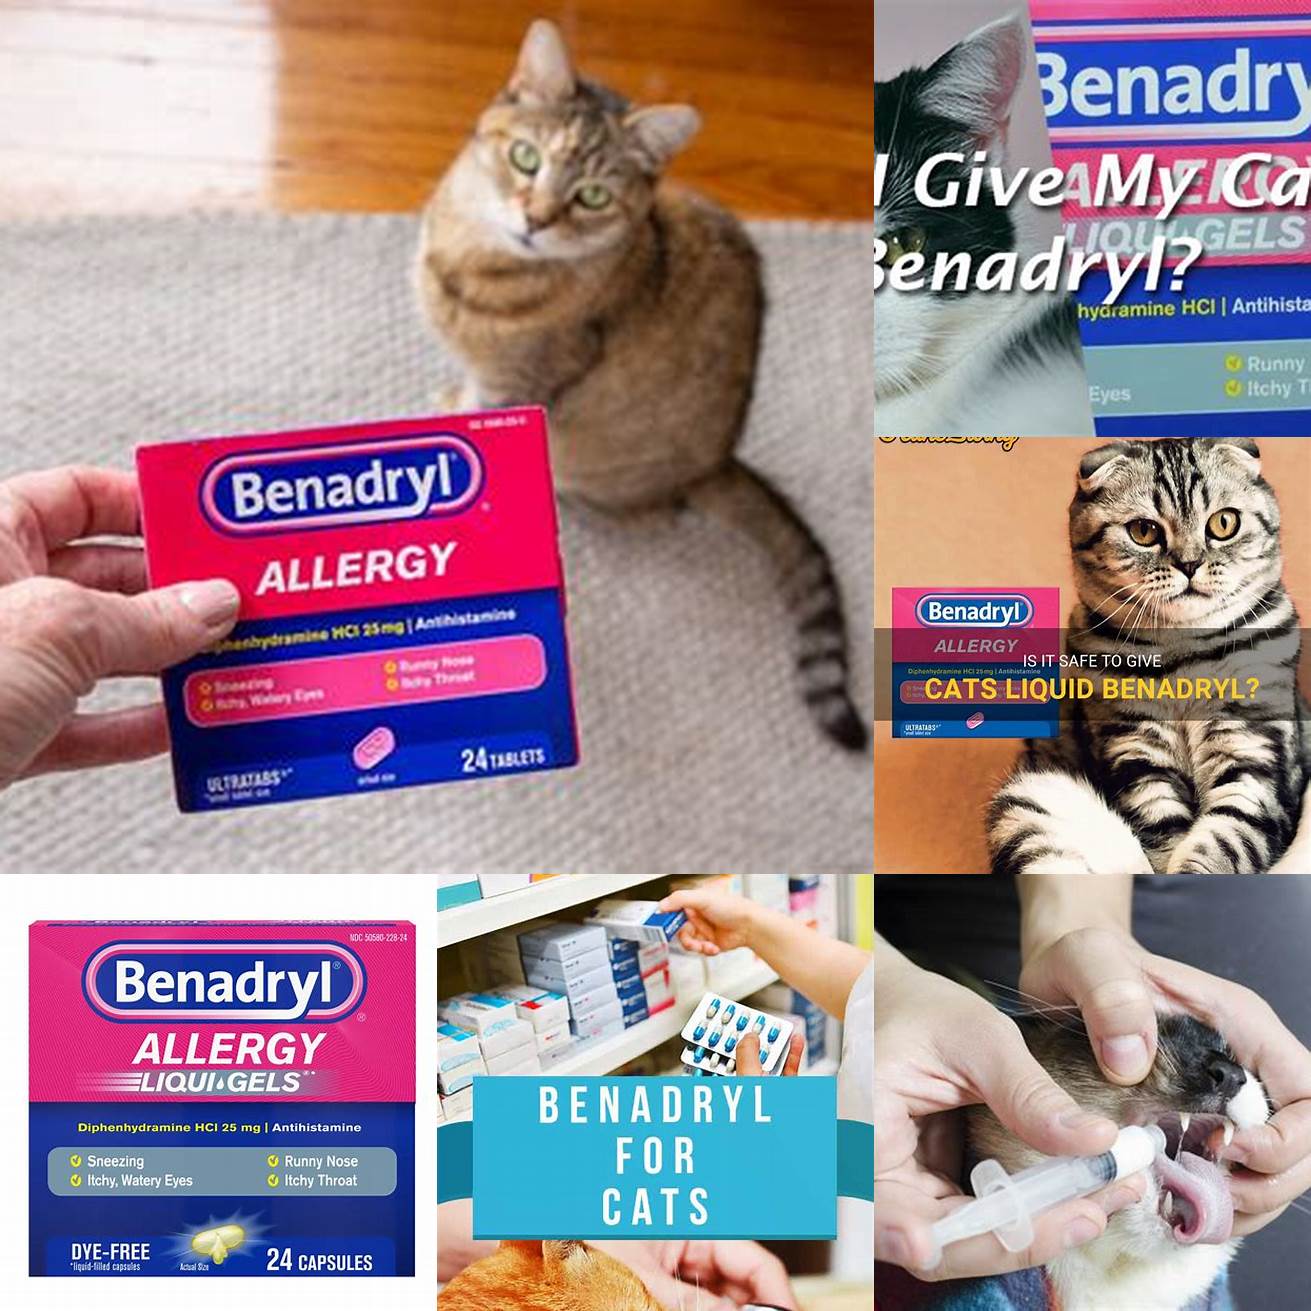 Q Can I give my cat liquid Benadryl